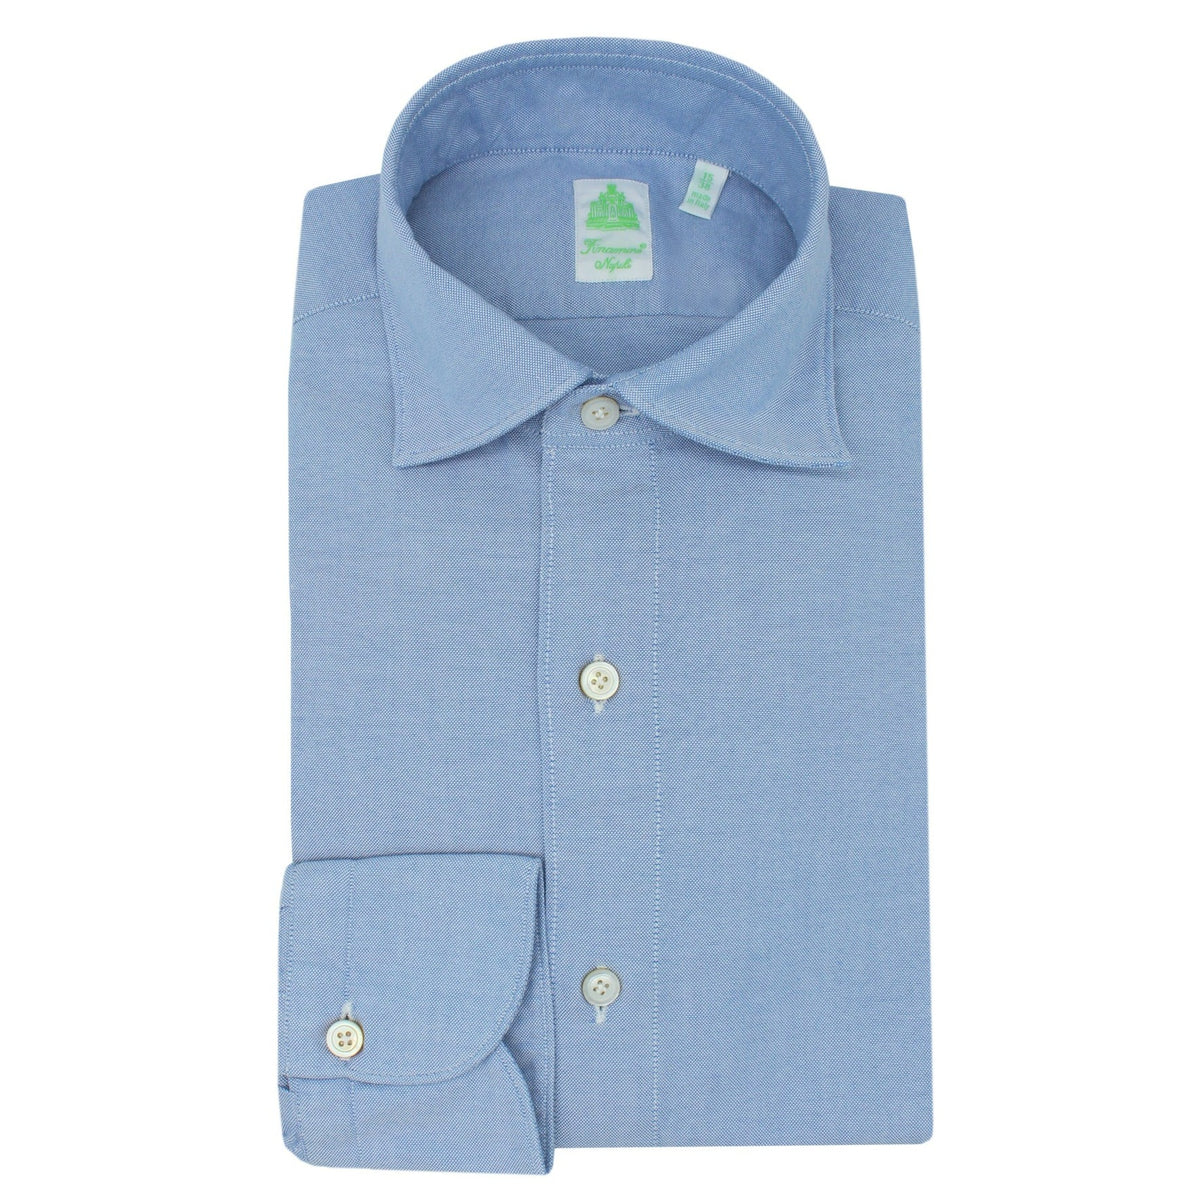 Gaeta sport shirt in light blue cotton oxford